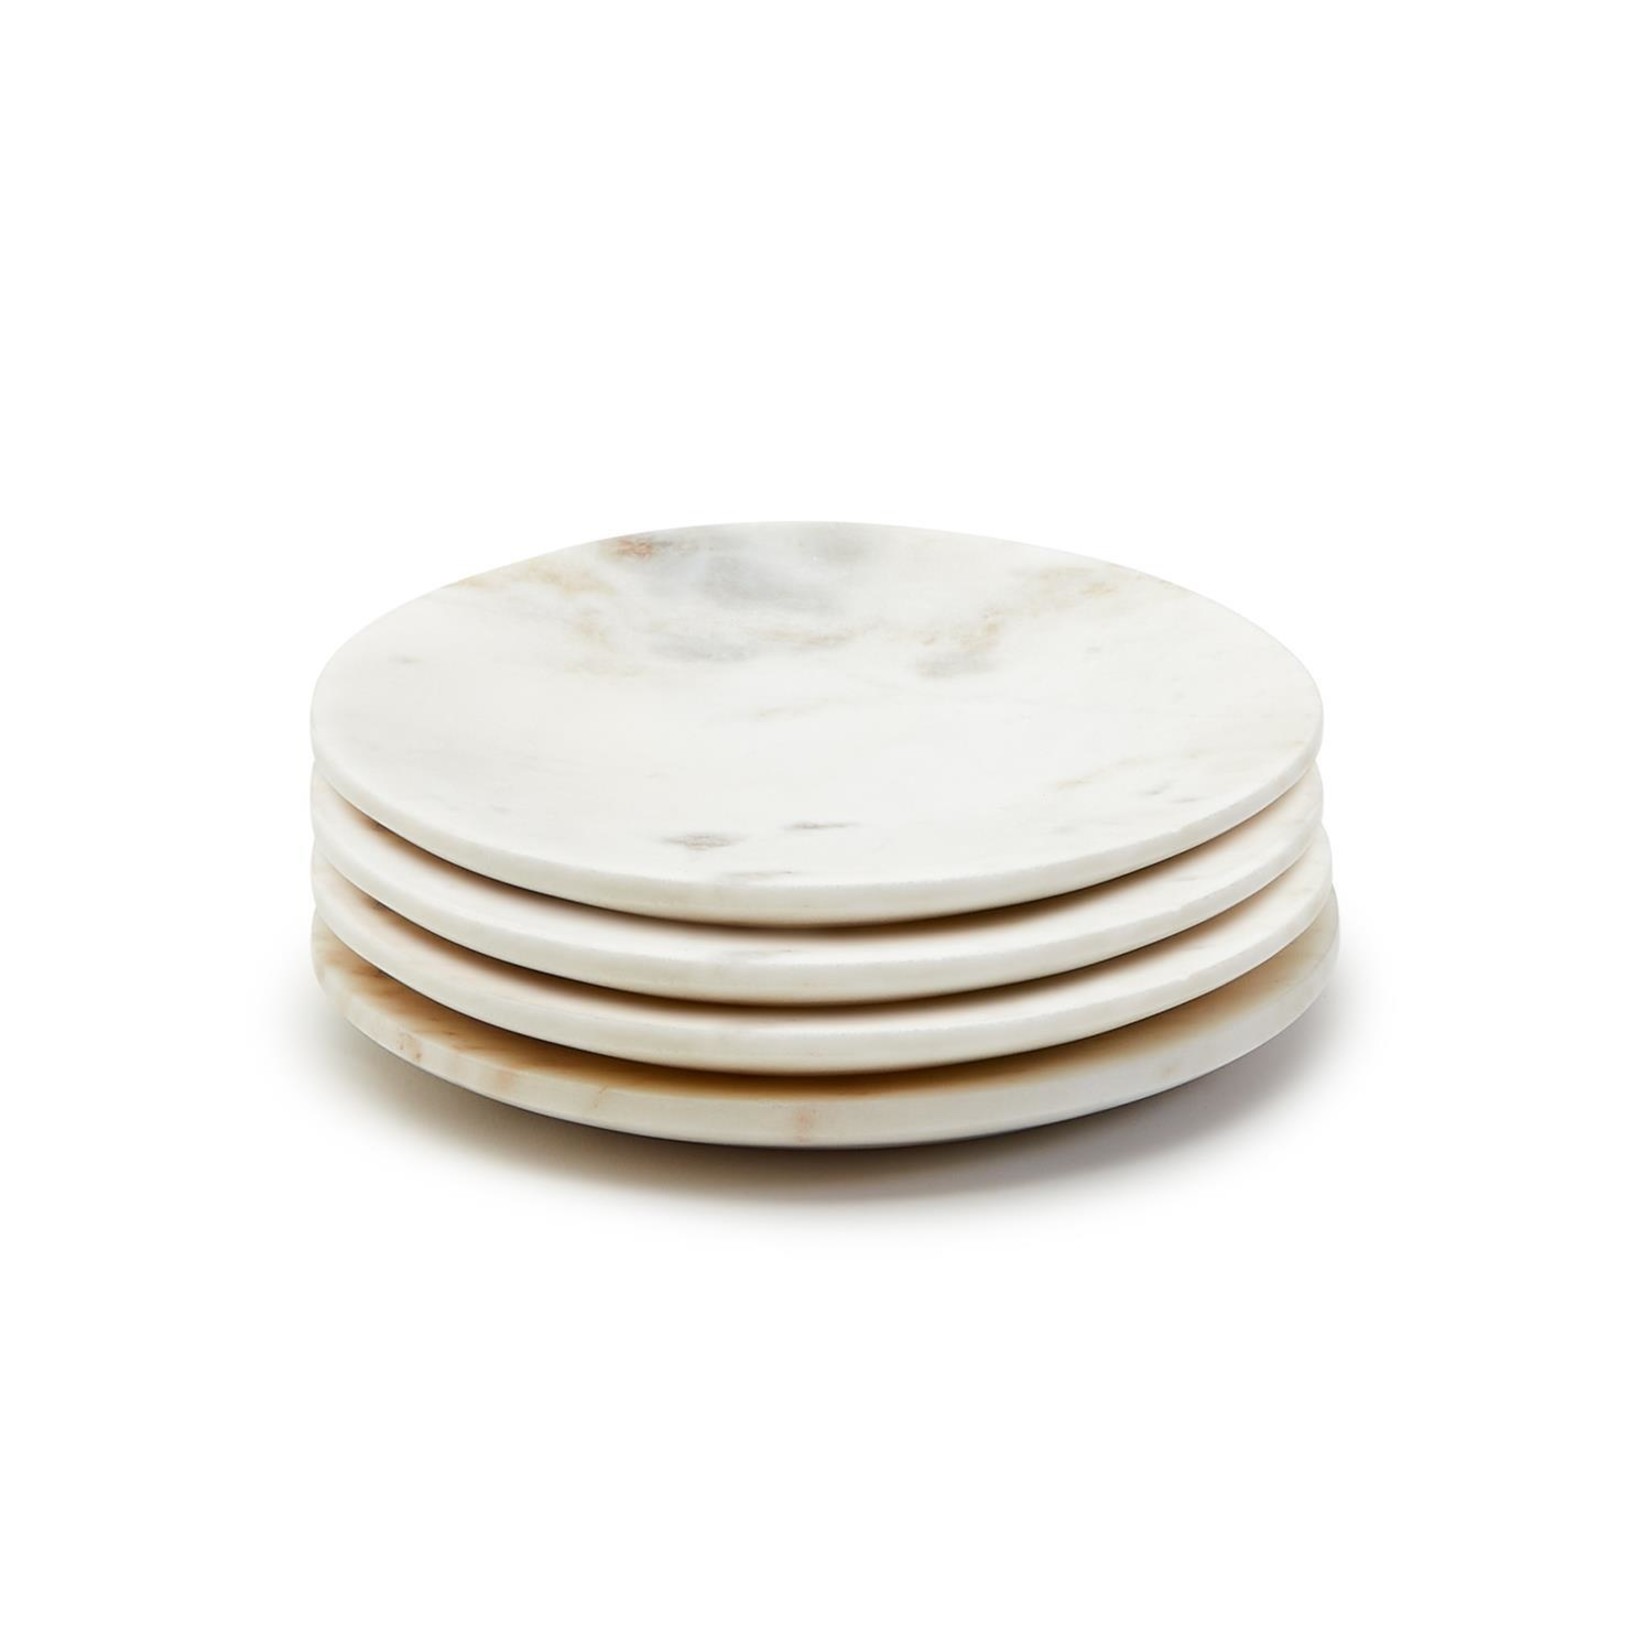 Two's Company Artesia S/4 White Marble Coasters